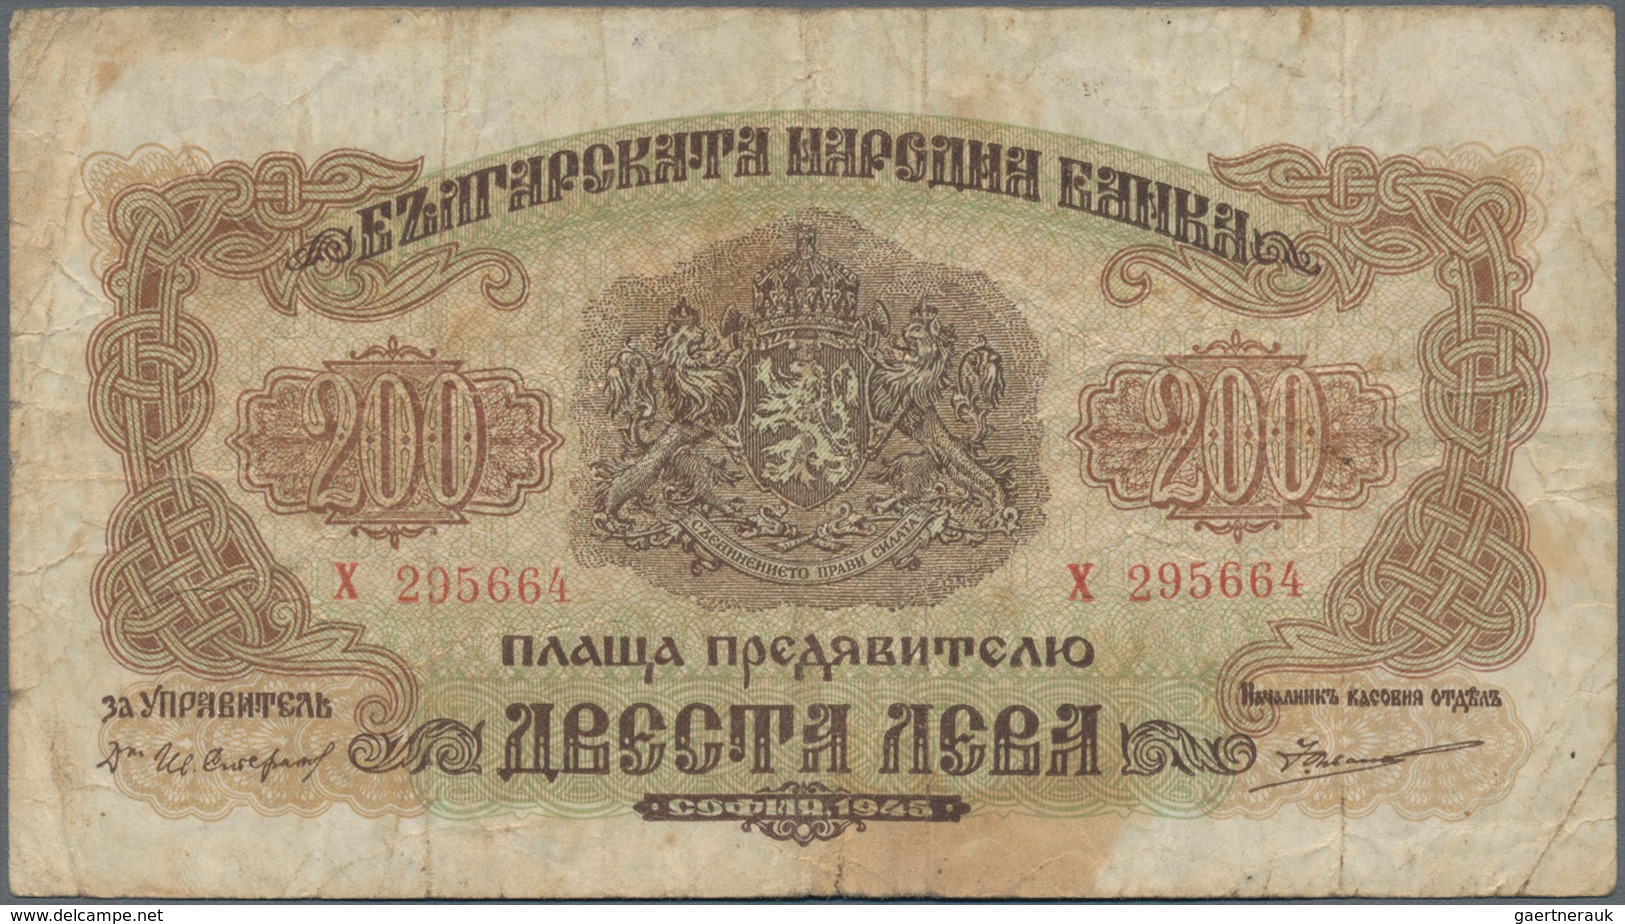 Bulgaria / Bulgarien: Very nice set with 11 banknotes Bulgaria ND(1916) till 1947 comprising 100 Gol